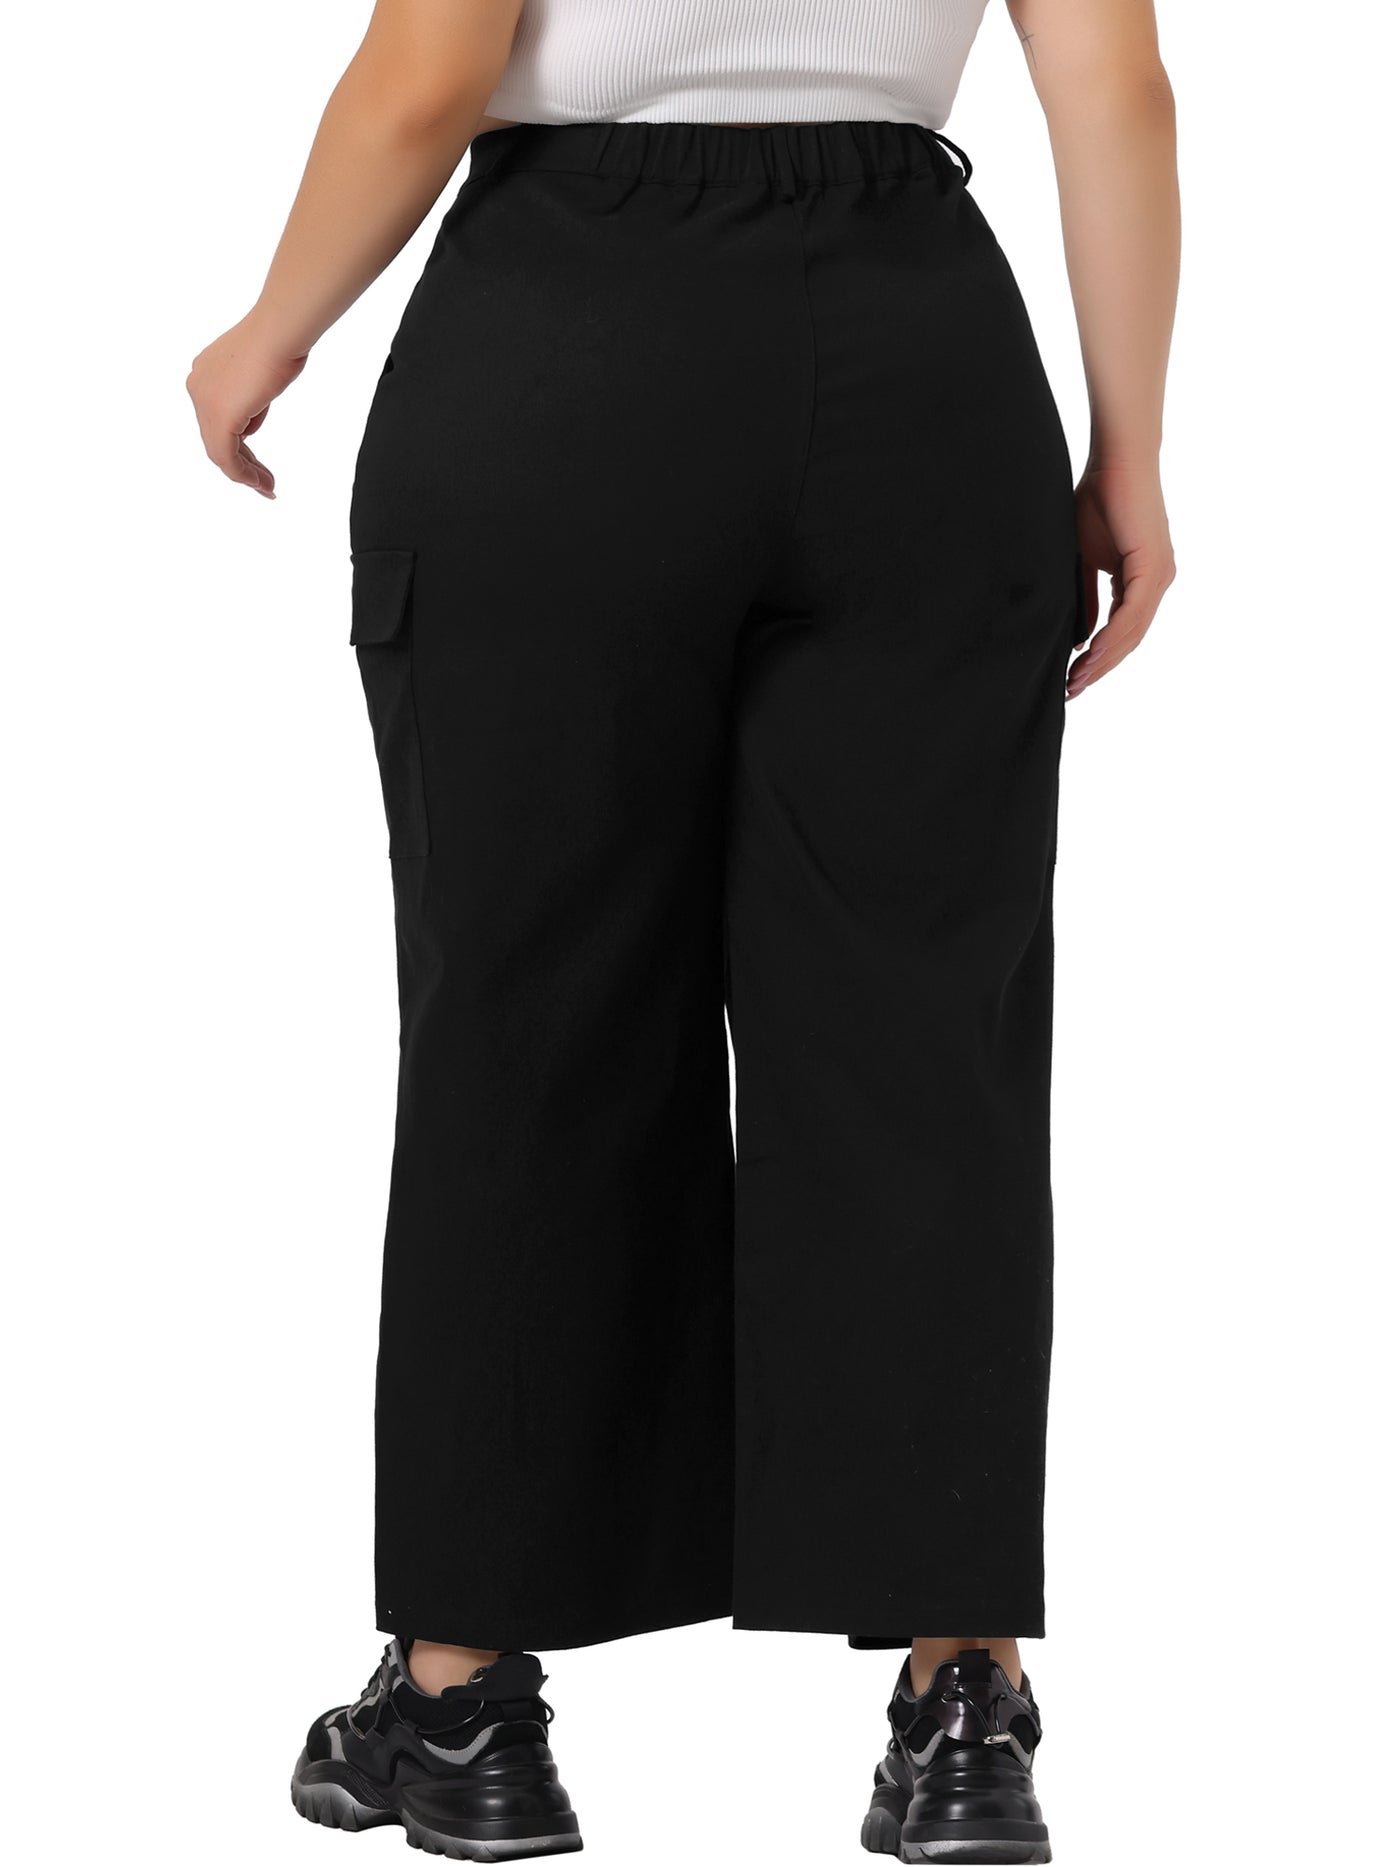 Bublédon Plus Size Cargo Pants for Women Elastic Waist Pockets Outdoor Workout Trousers